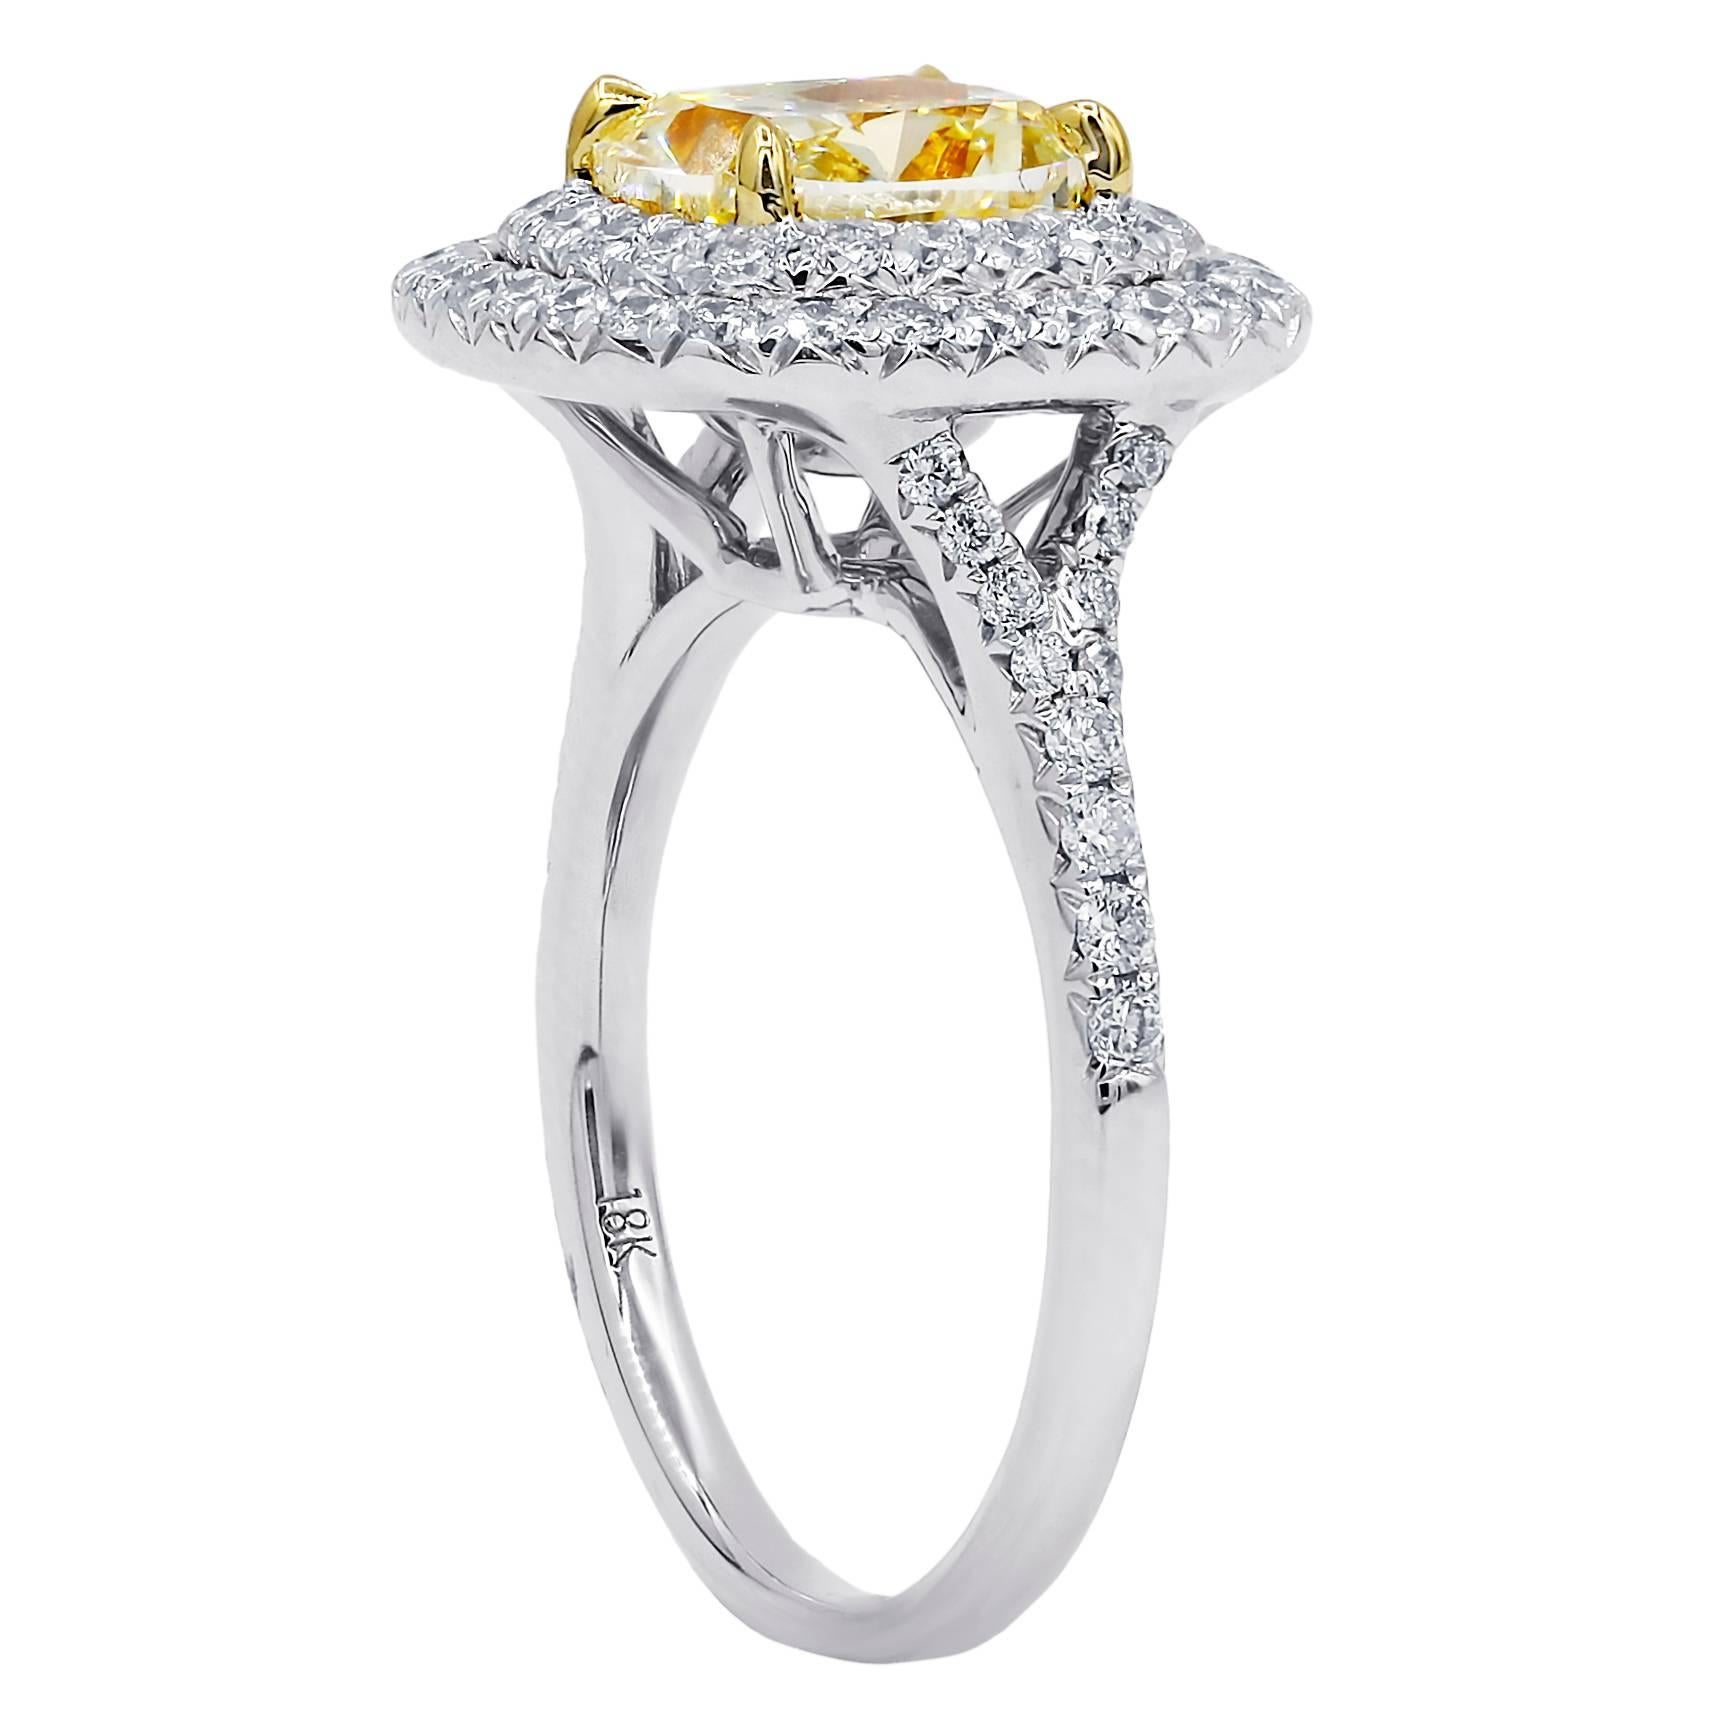 200 carat diamond ring